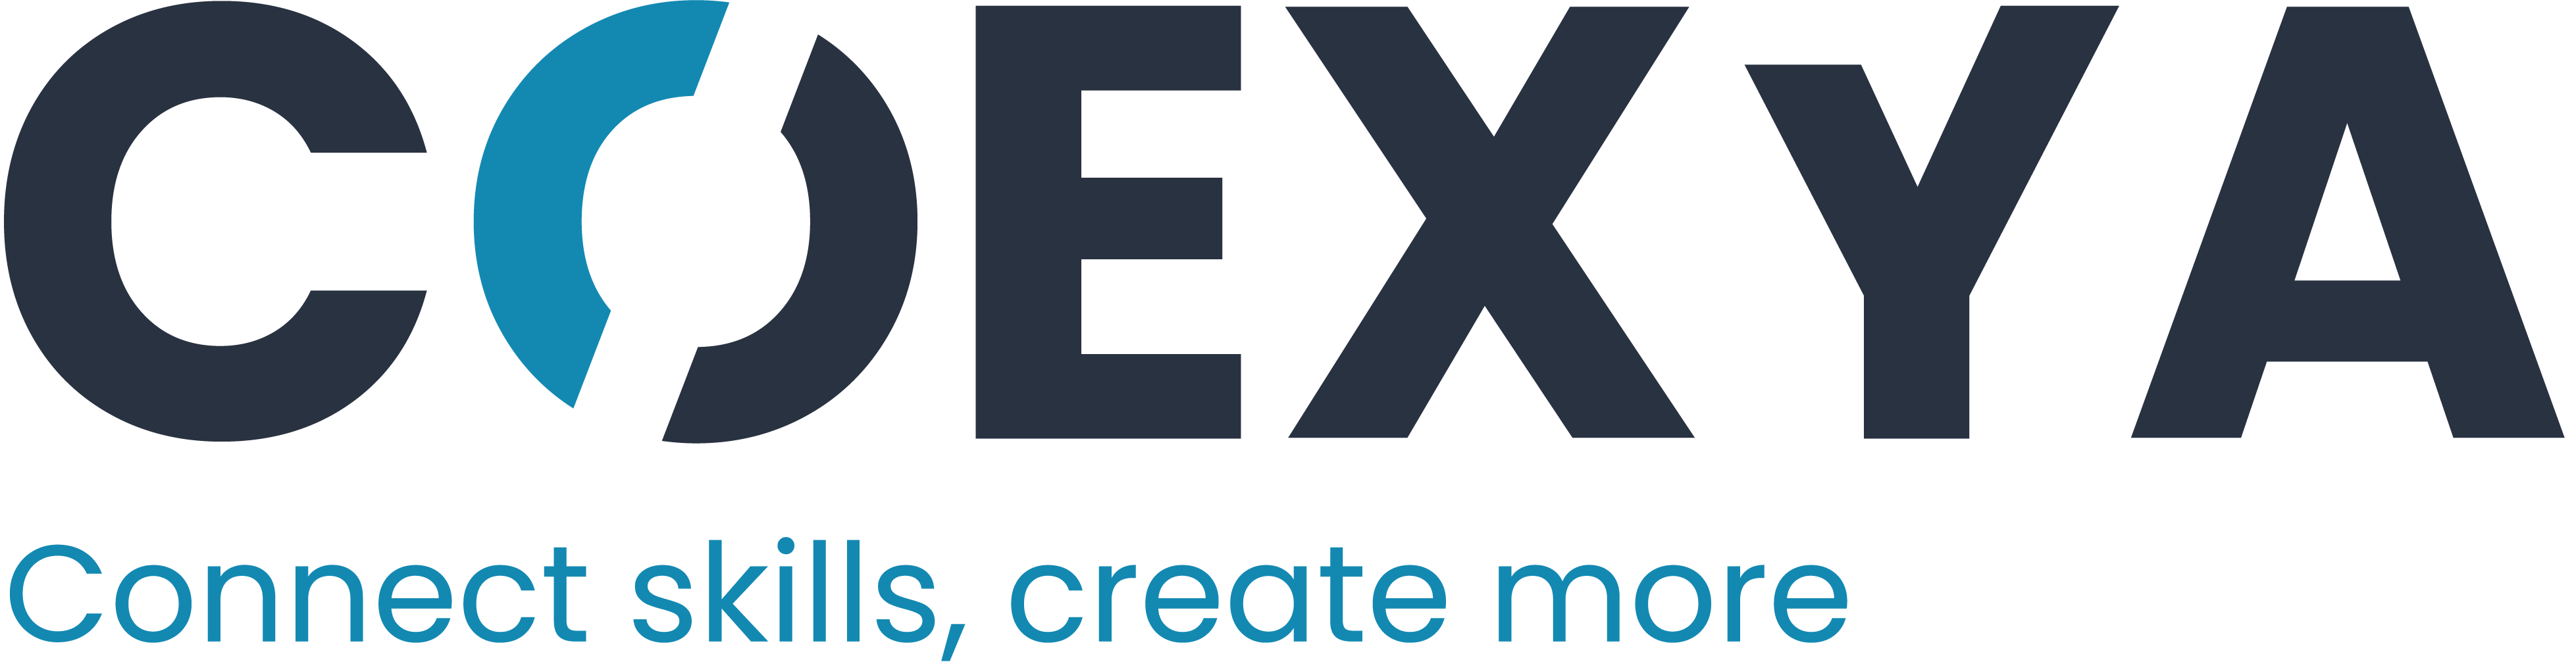 Coexya logo